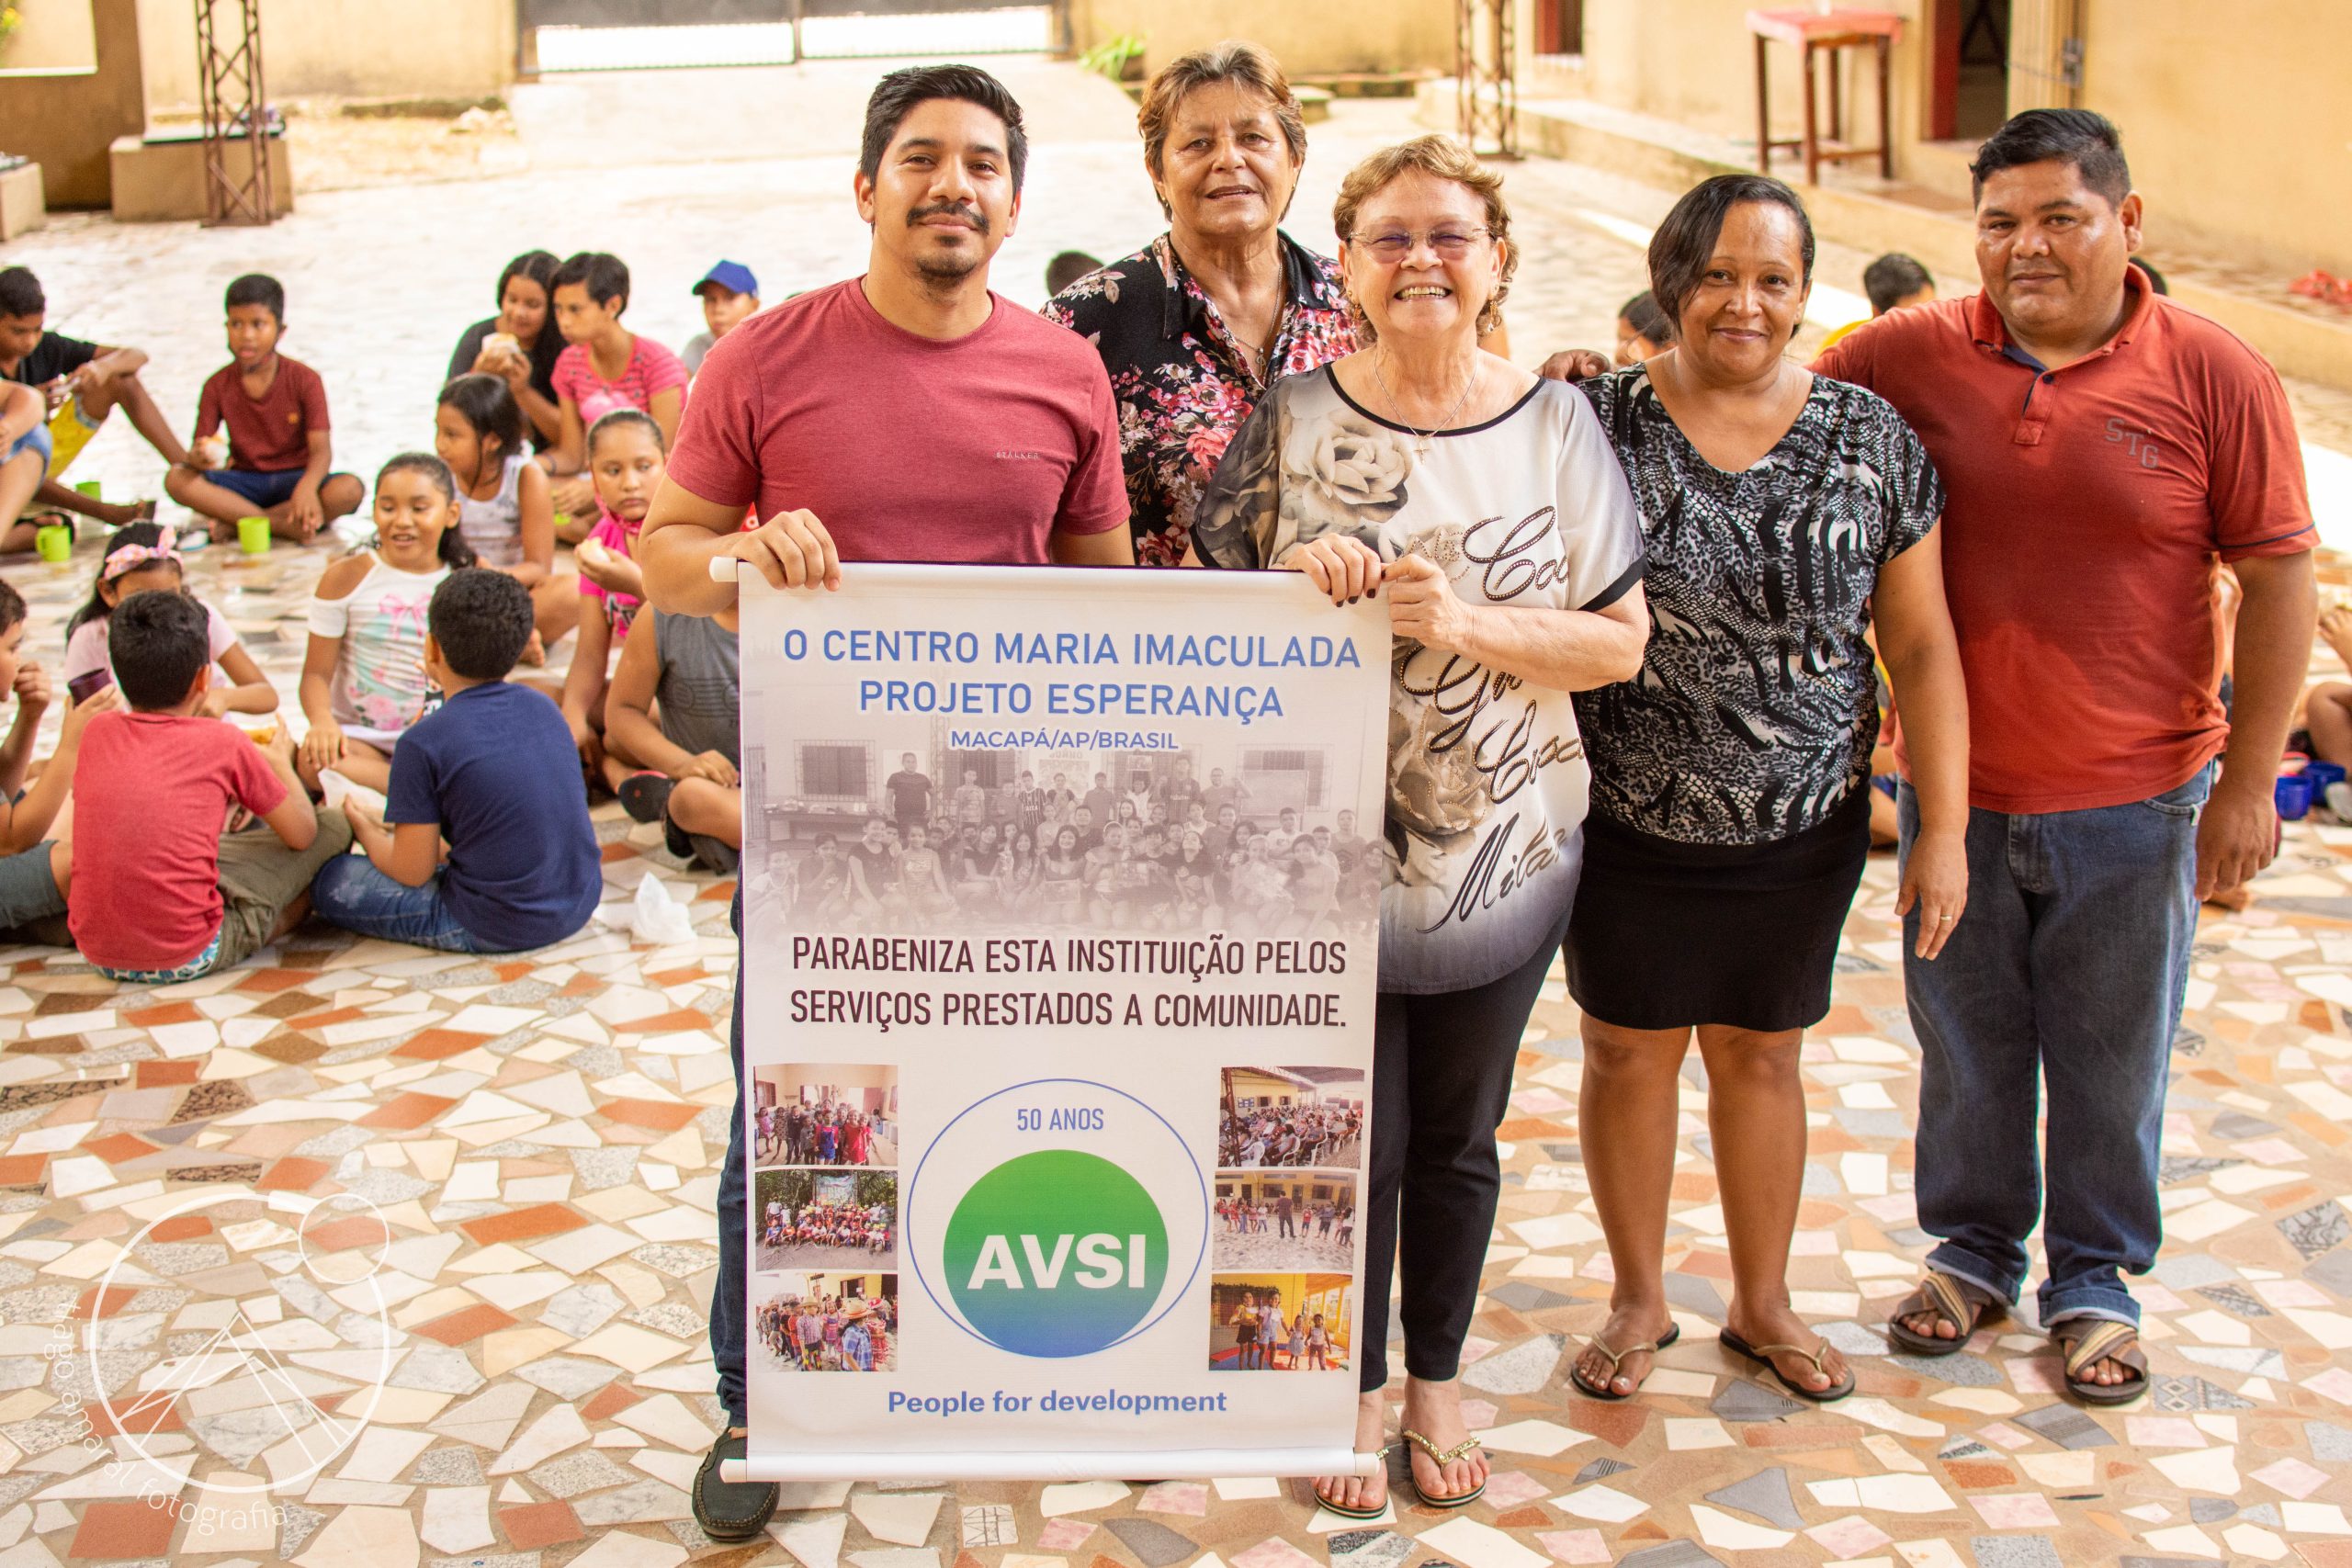 Nazaré Souza - Encaminhamos As Fotos E VÏdeos Do Centro Maria Imaculada Para A Festa De 50 Anos Da AVSI.